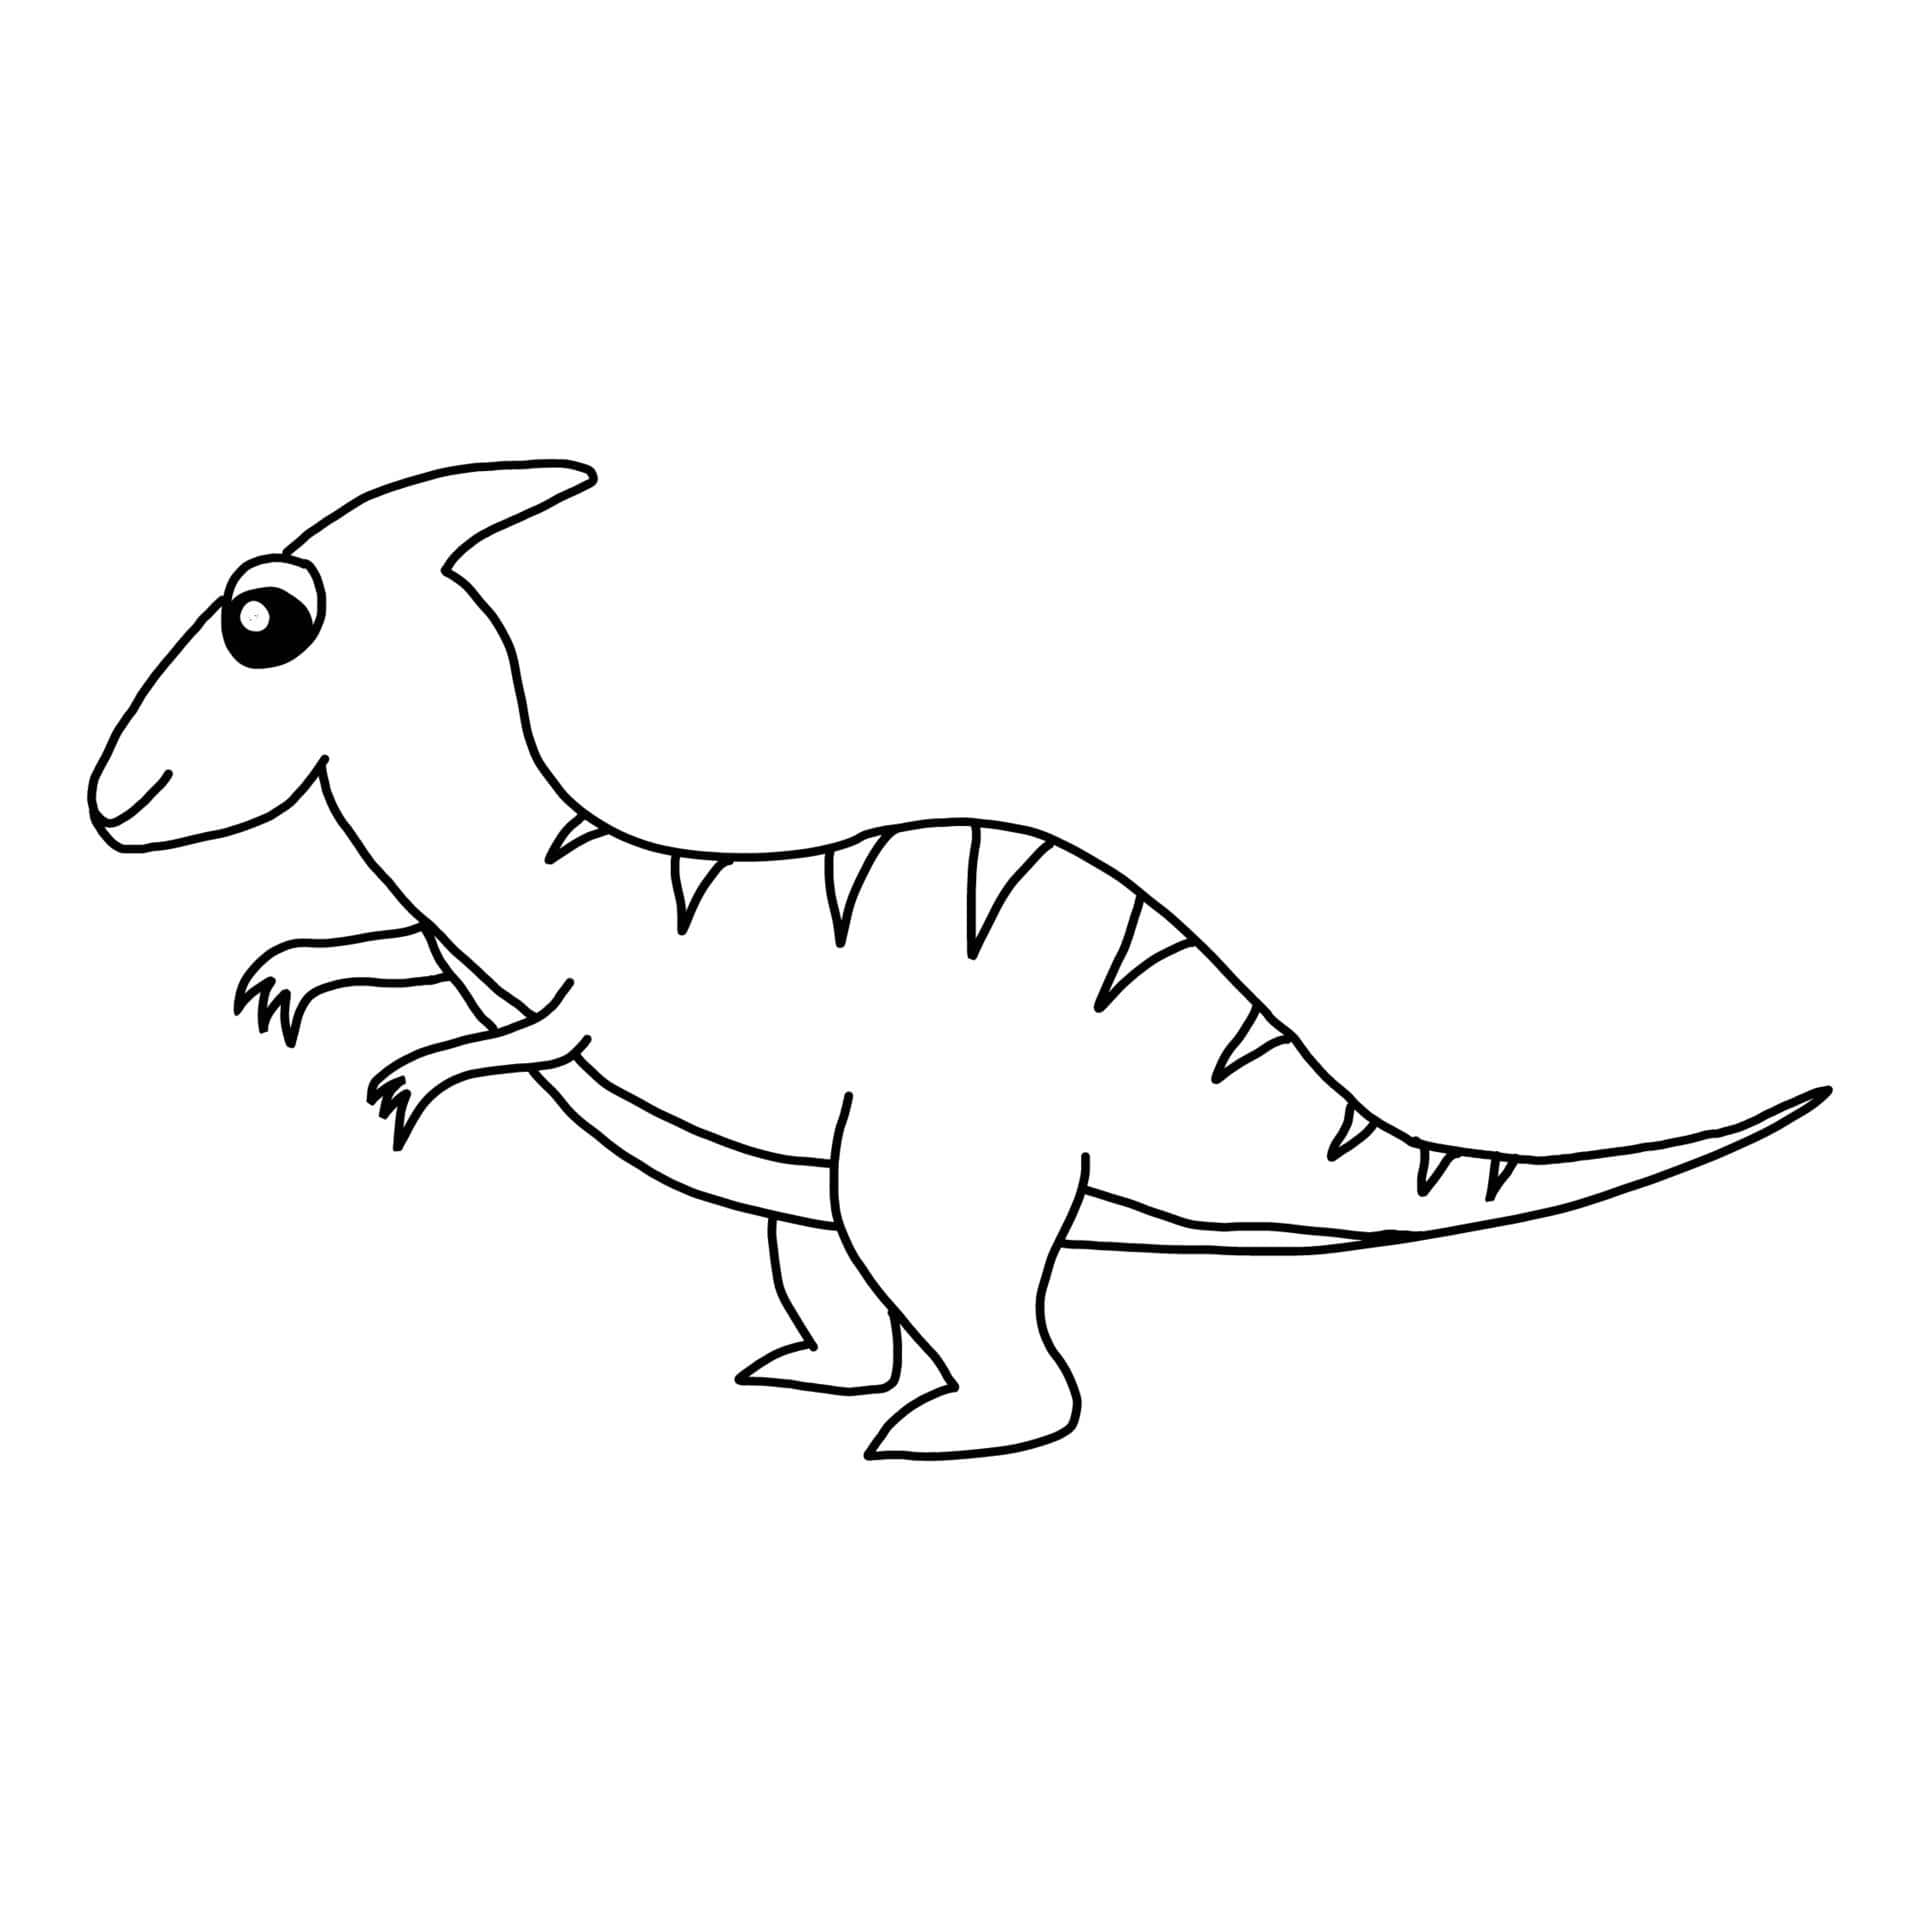 Colorful, Creative Dinosaur Drawing